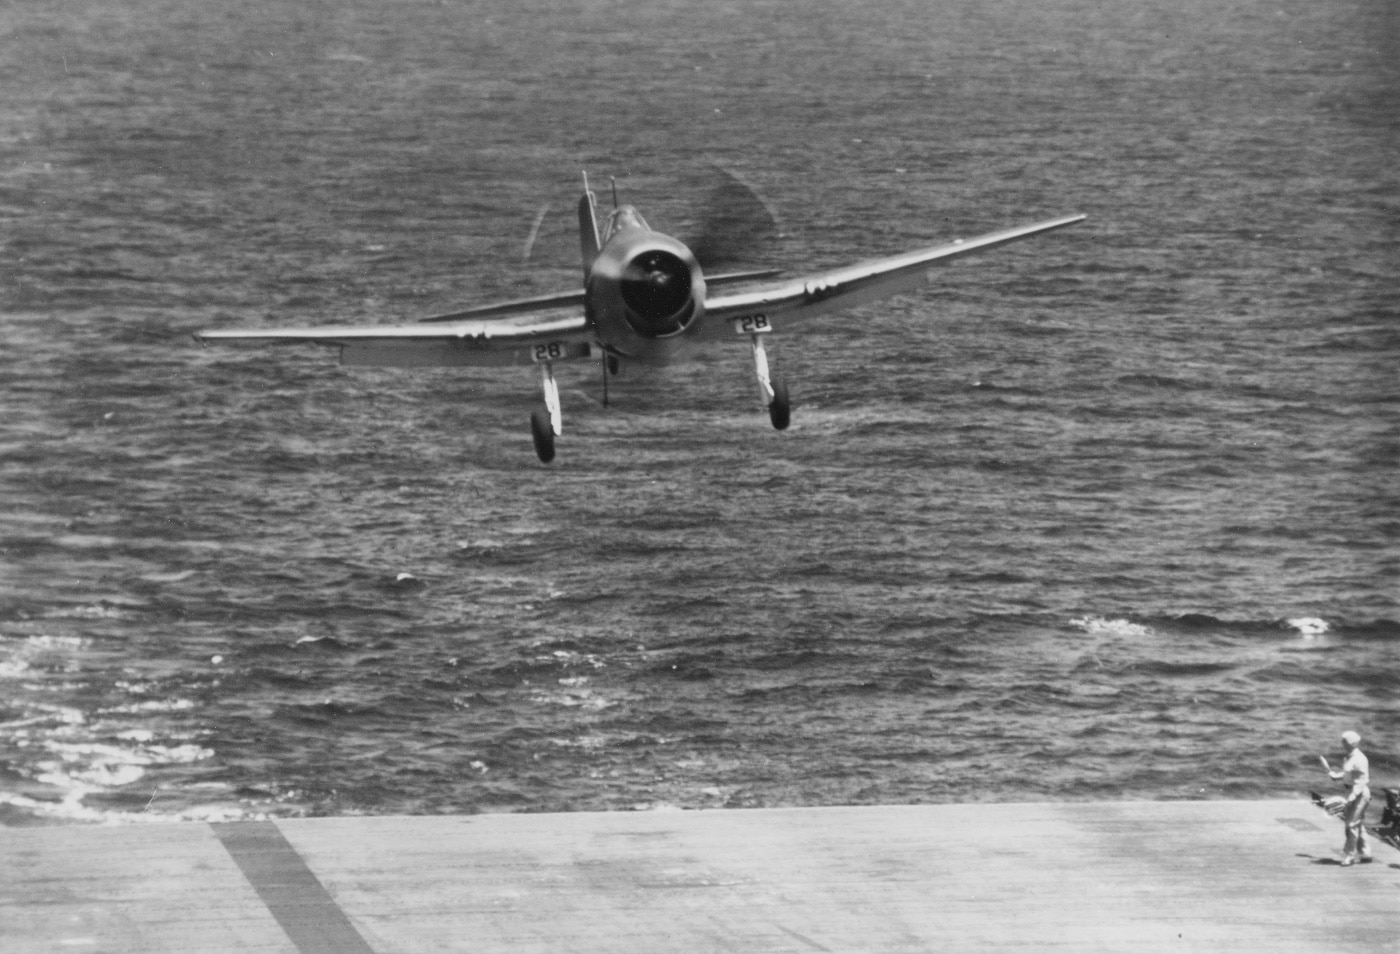 grumman f6f hellcat landing on uss lexington 1943 us navy